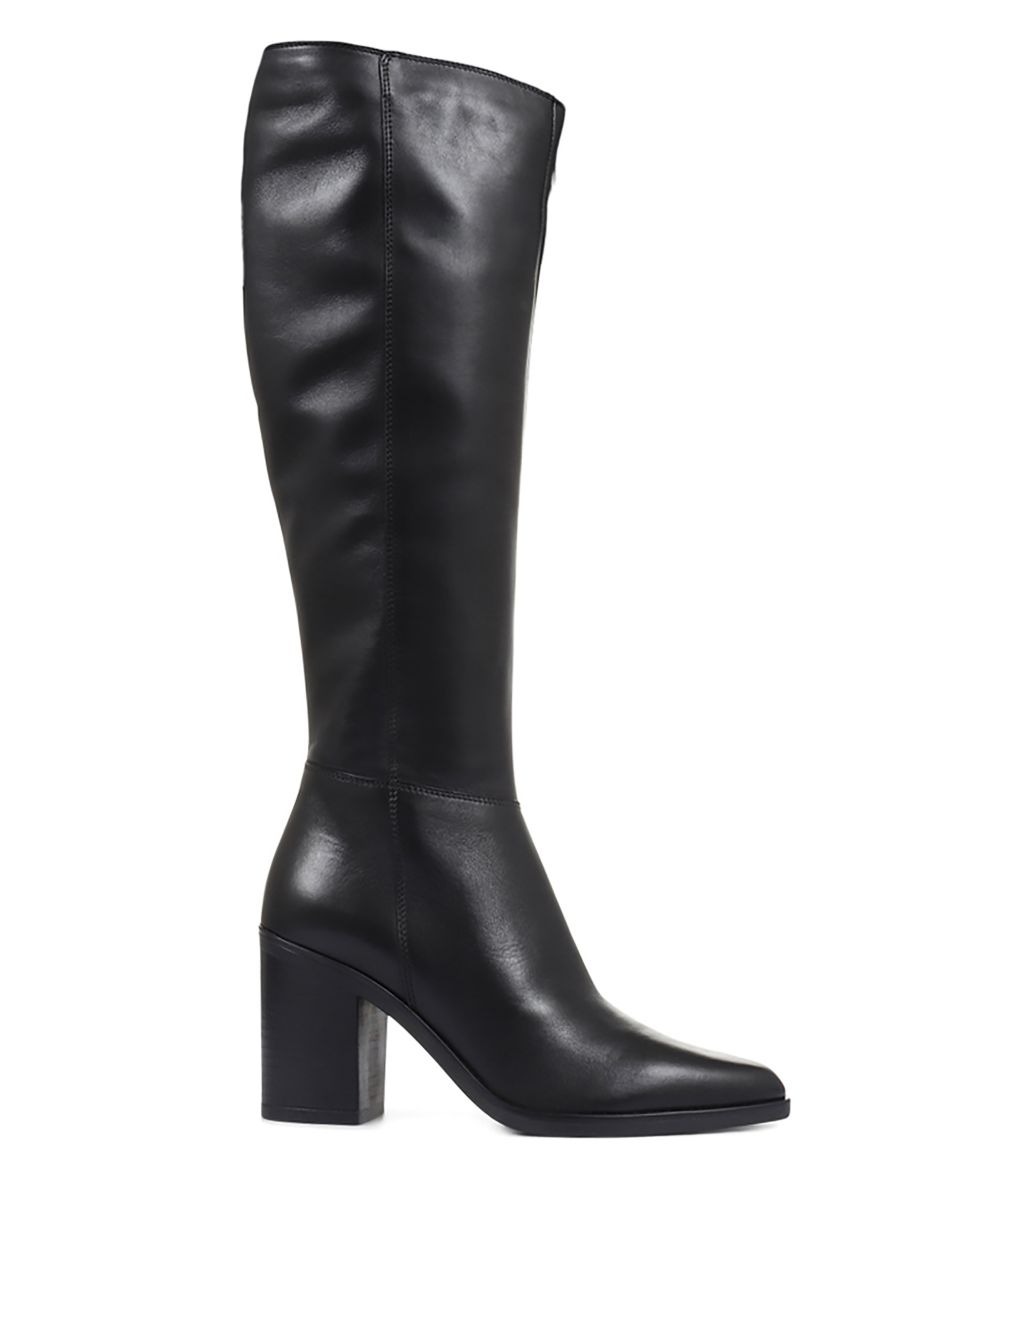 Regular Calf Leather Block Heel Pointed Knee High Boots image 3